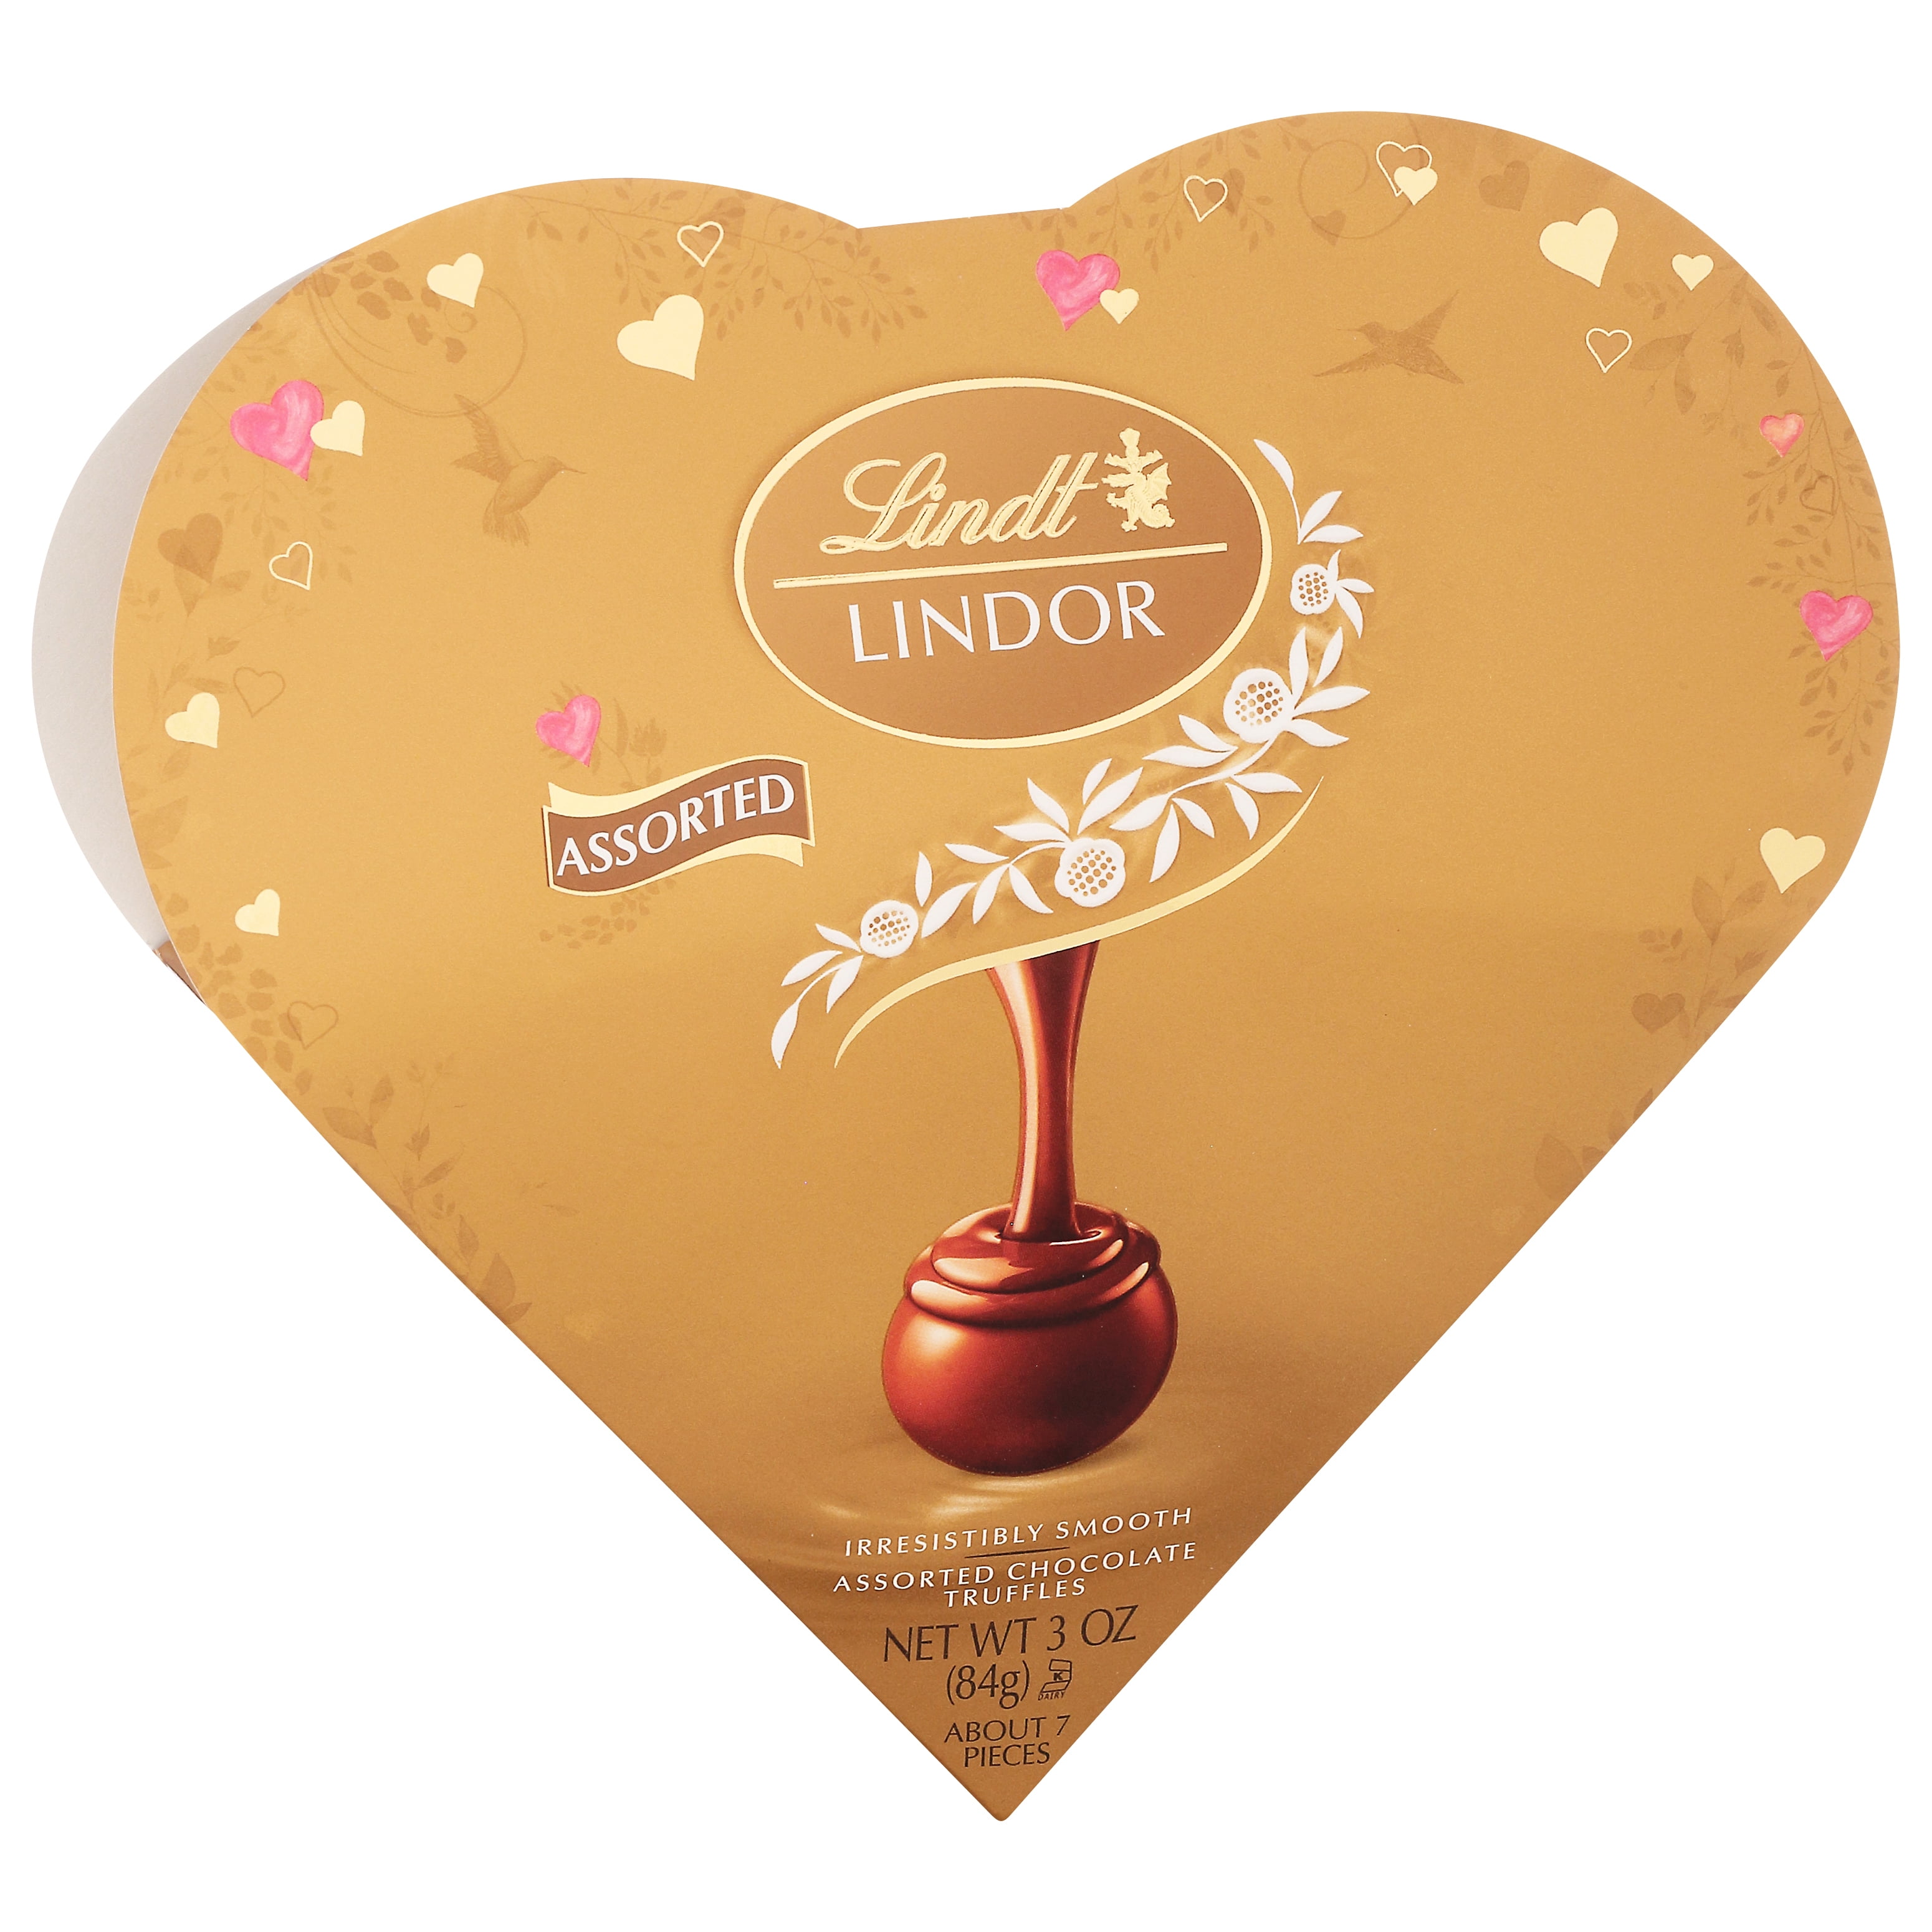 Lindt & Sprungli Lindt LINDOR Valentine's Assorted Chocolate Truffles Friend Heart, 3 oz.